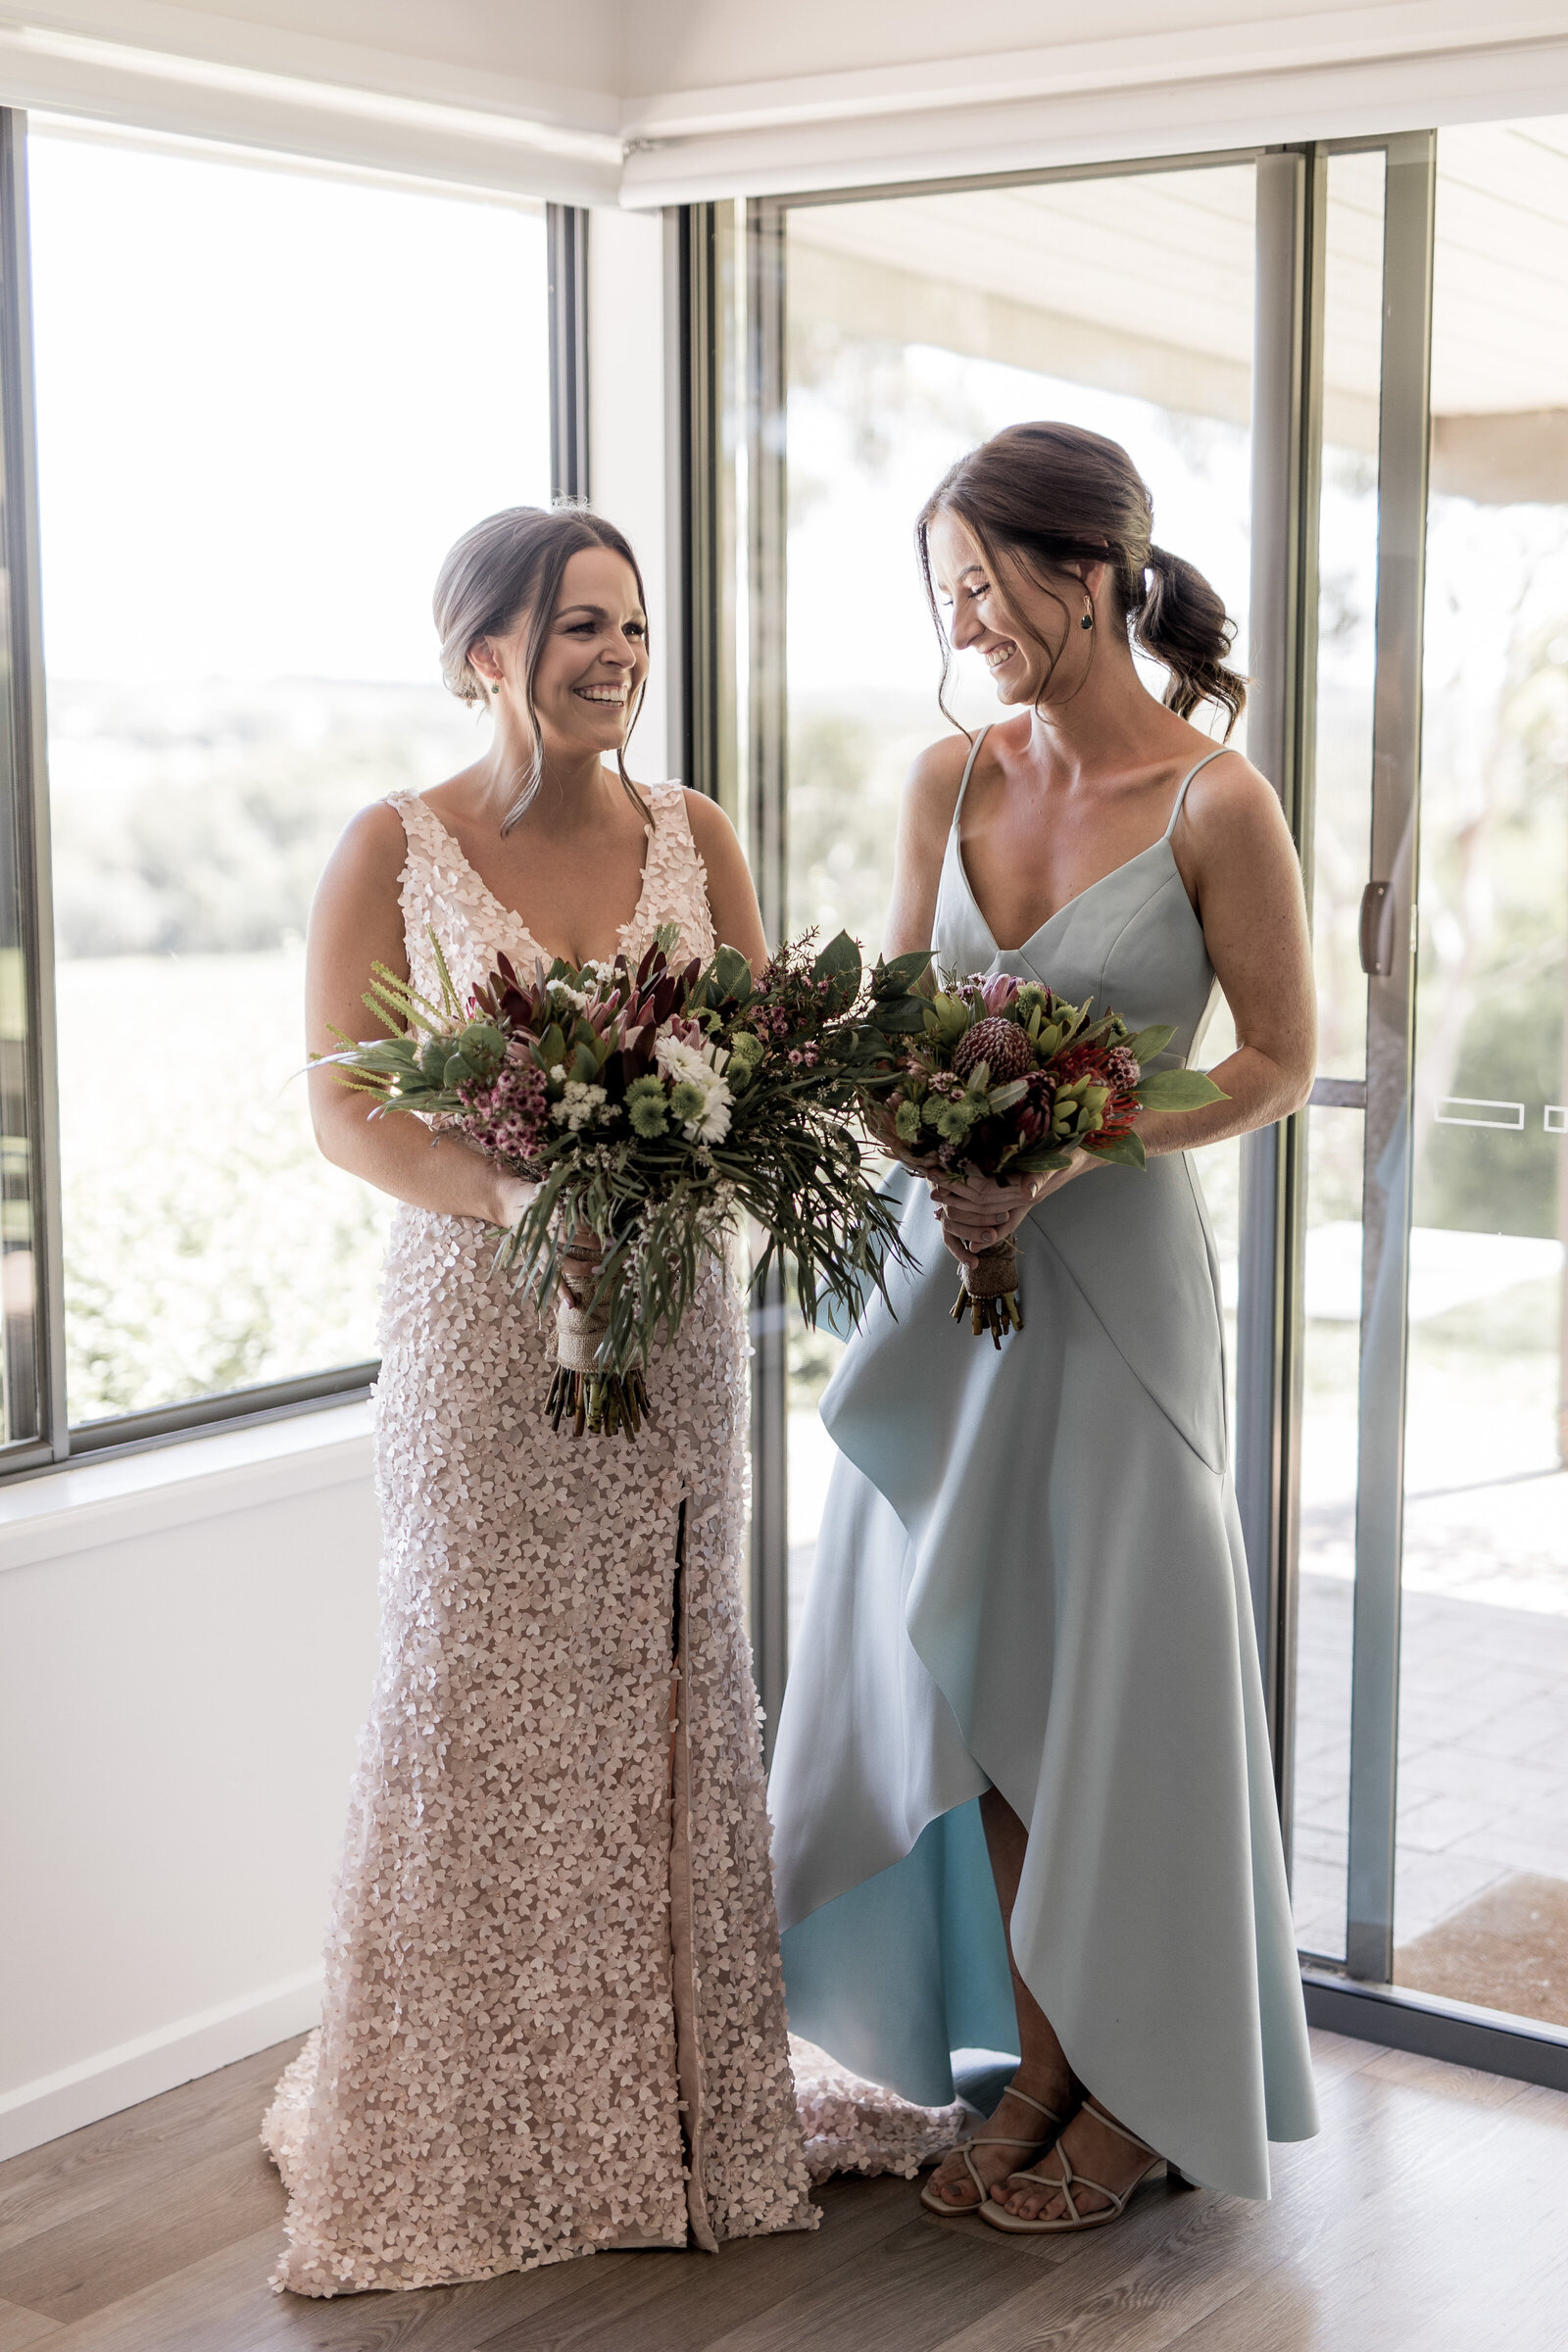 Chloe-Benny-Rexvil-Photography-Adelaide-Wedding-Photographer-137